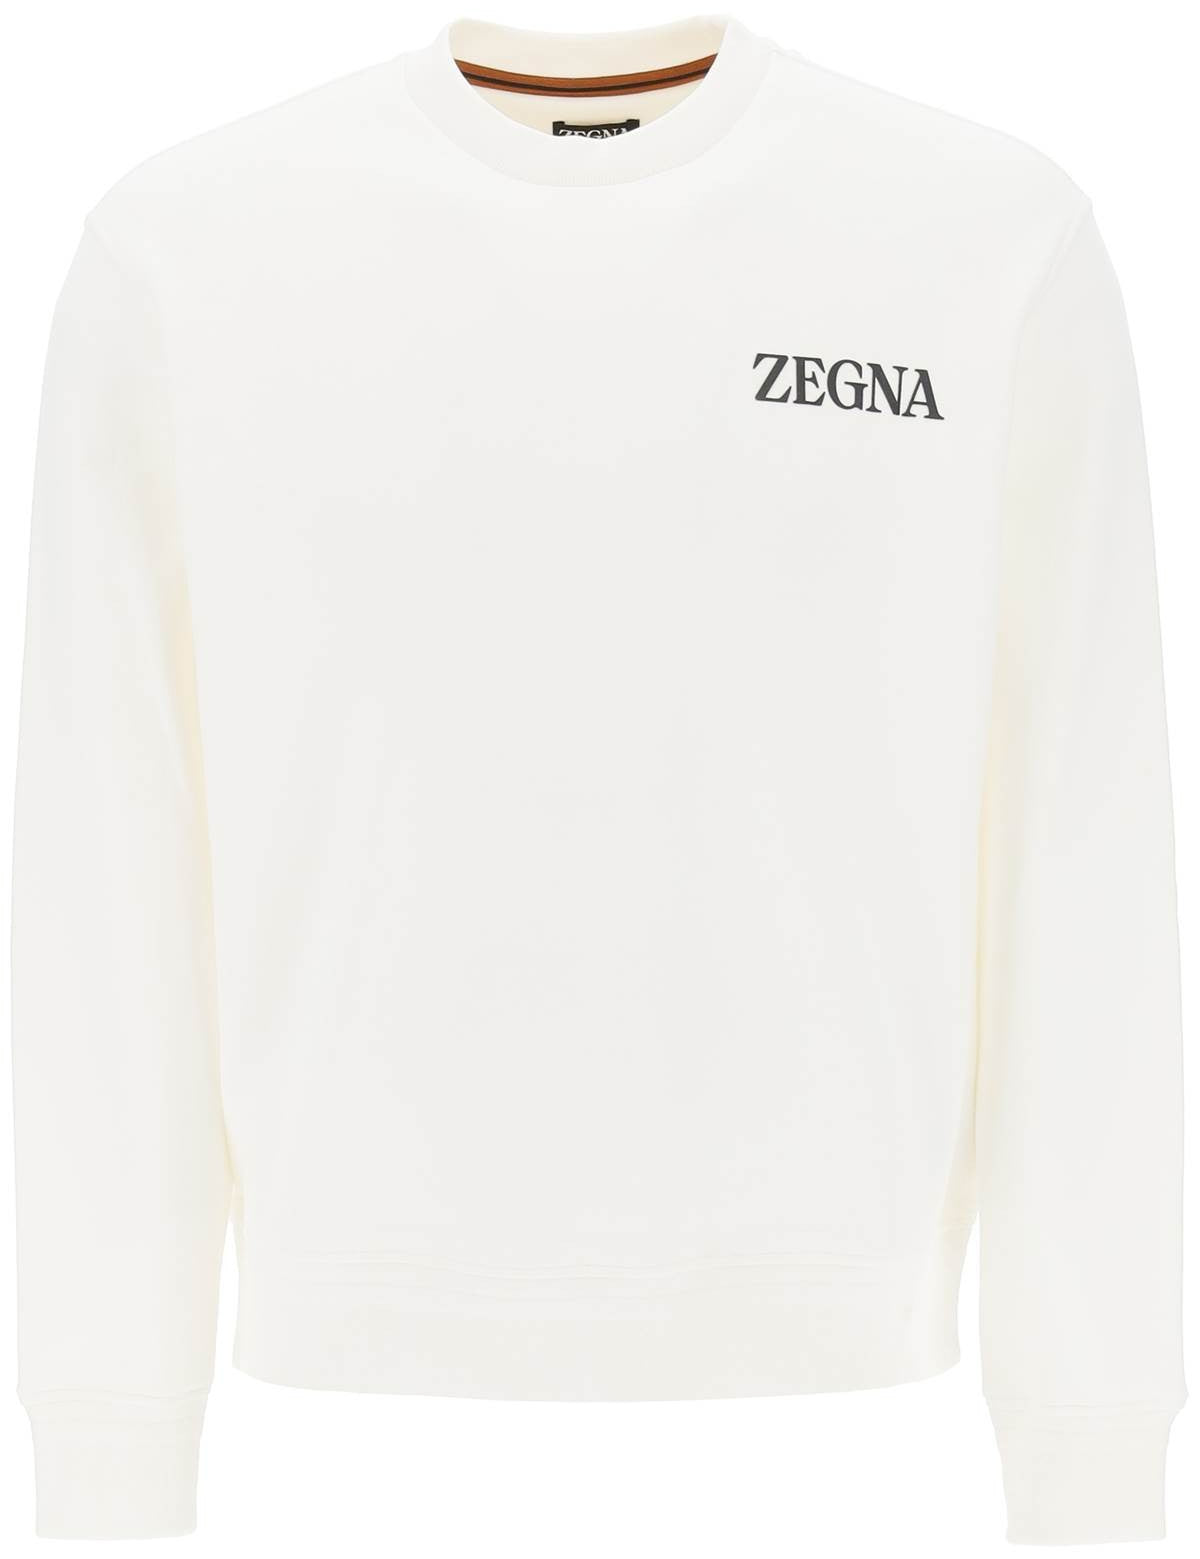 zegna-crew-neck-sweatshirt-with-flocked-logo_a3bde0ec-b3bd-4689-a617-cfa63e5a8db2.jpg